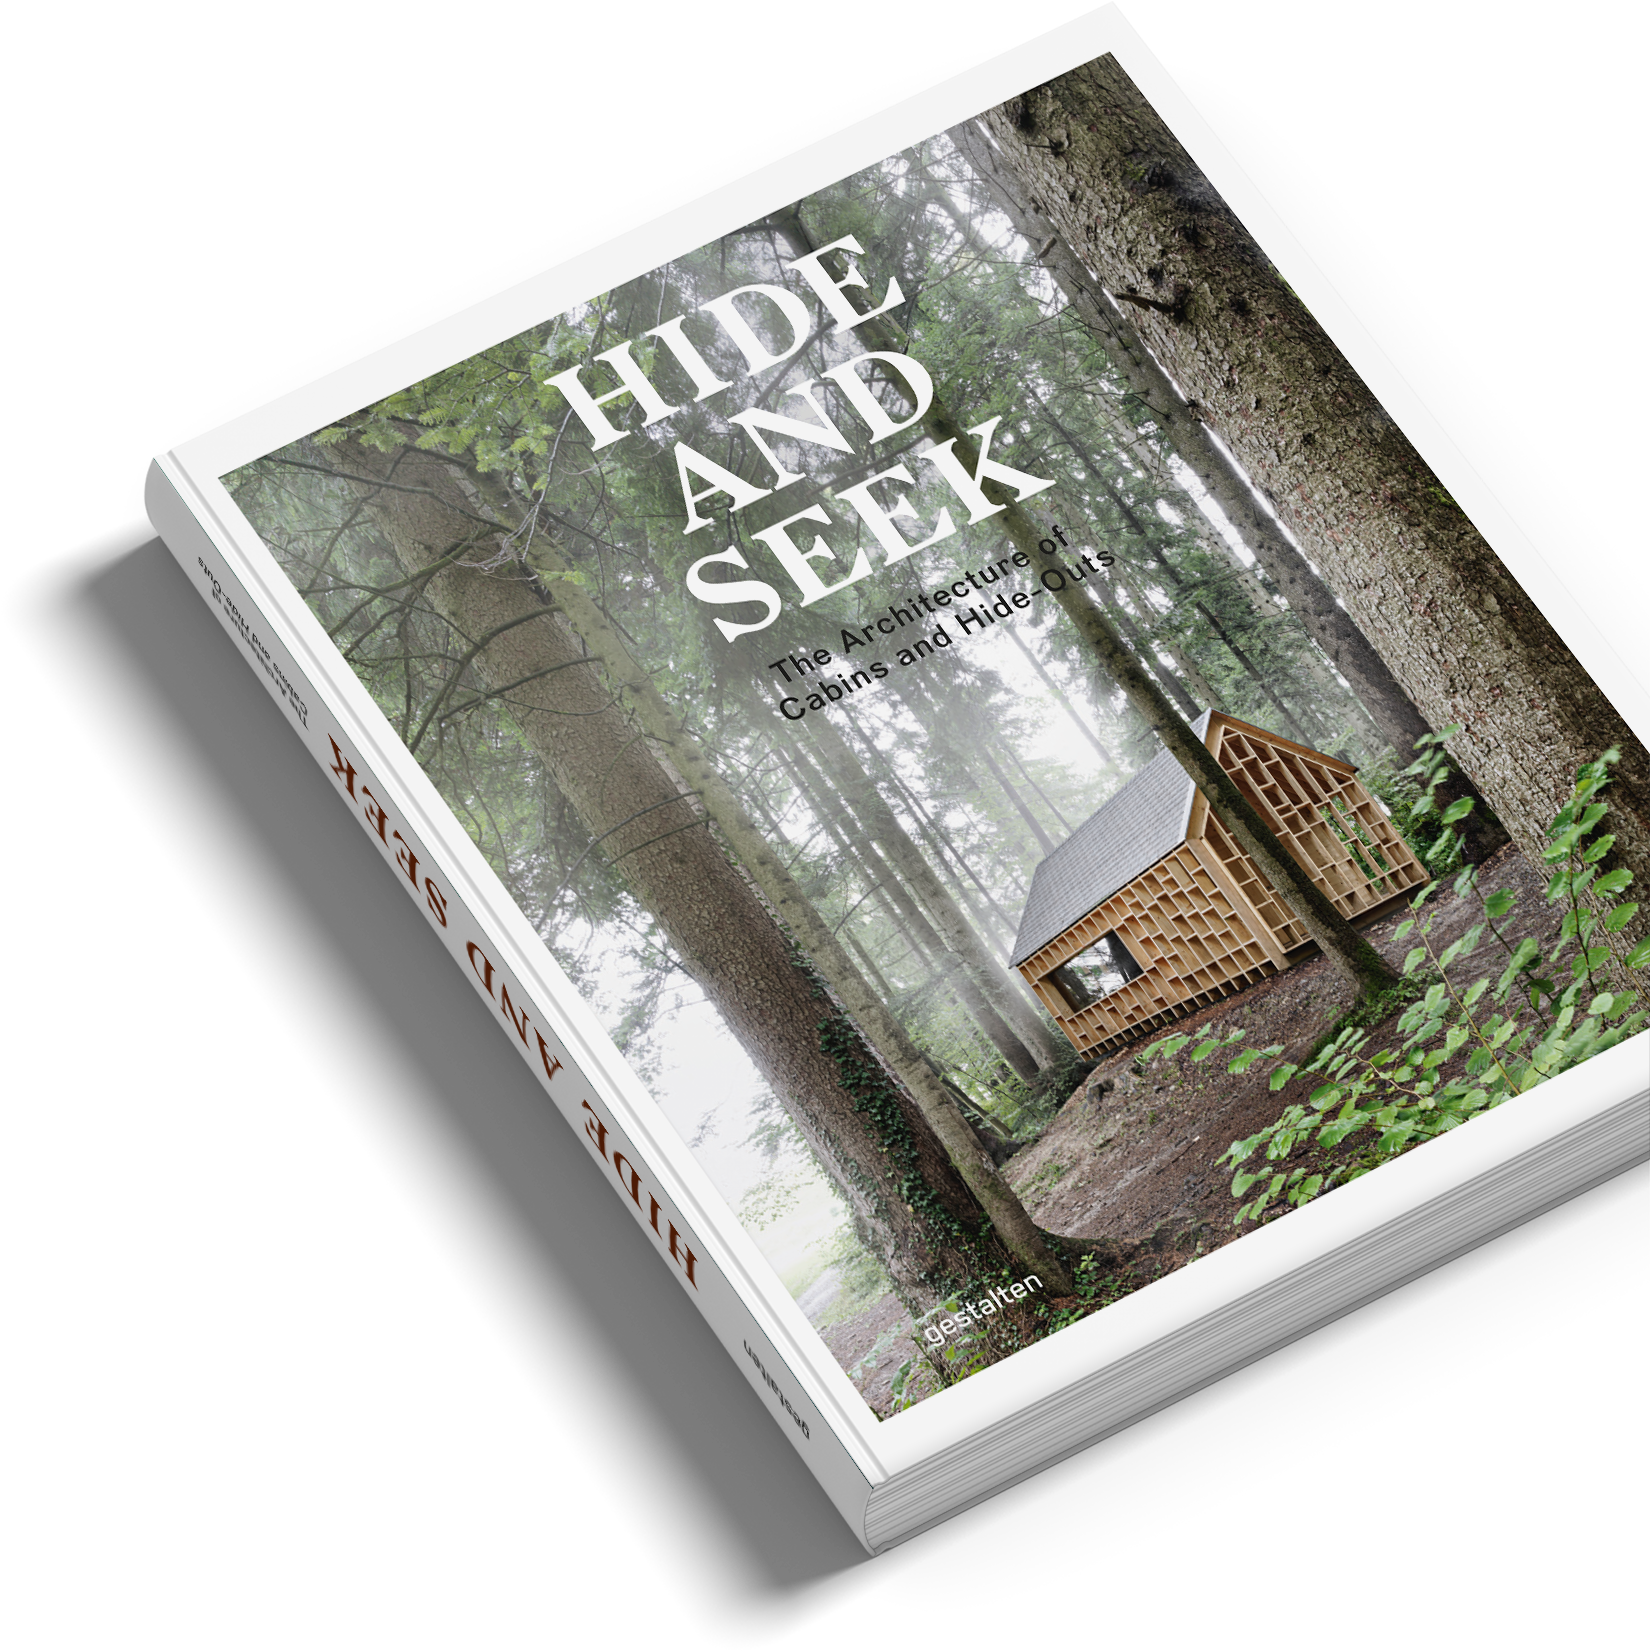 Hideand Seek Cabin Architecture Book PNG